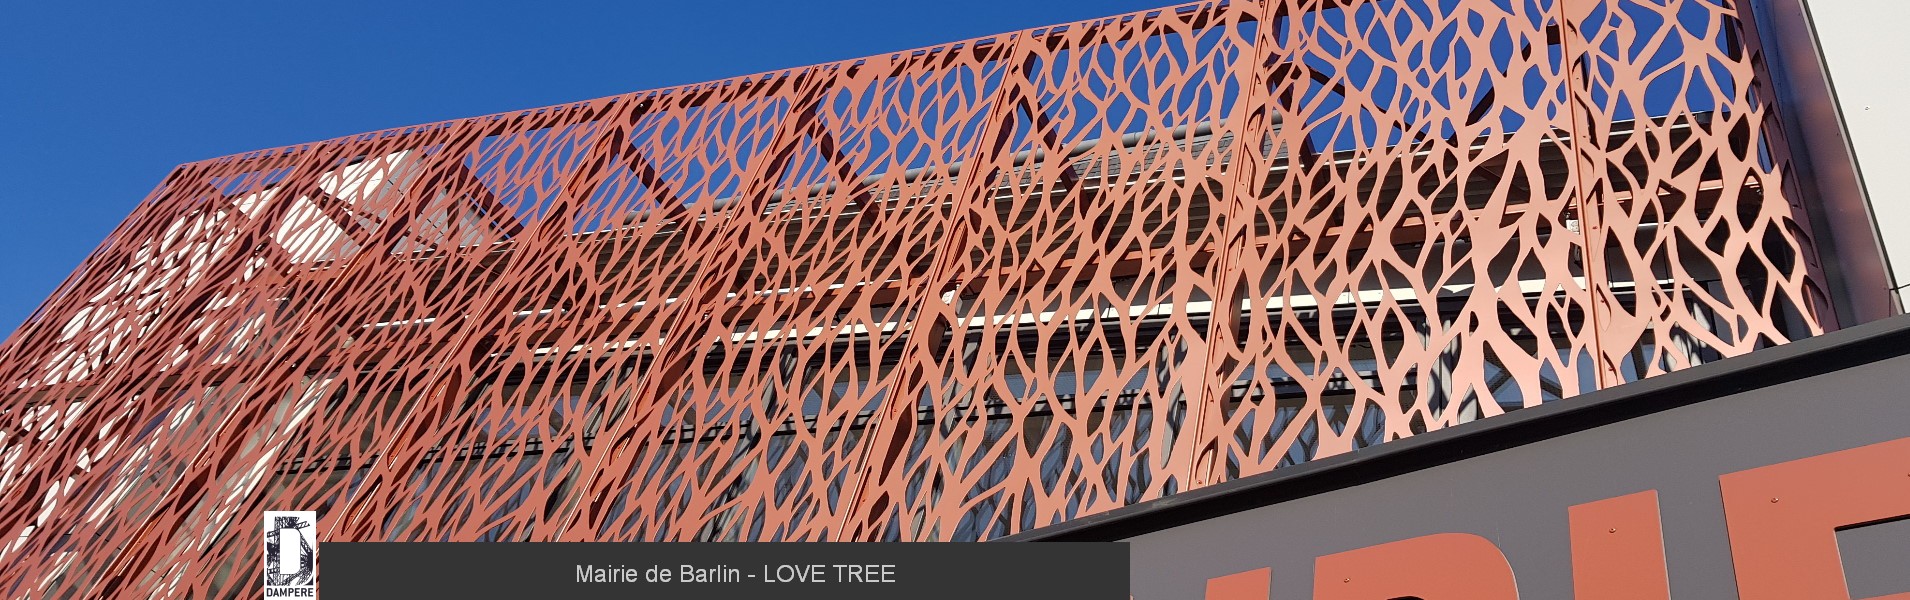 Mairie de Barlin LOVE TREE 1